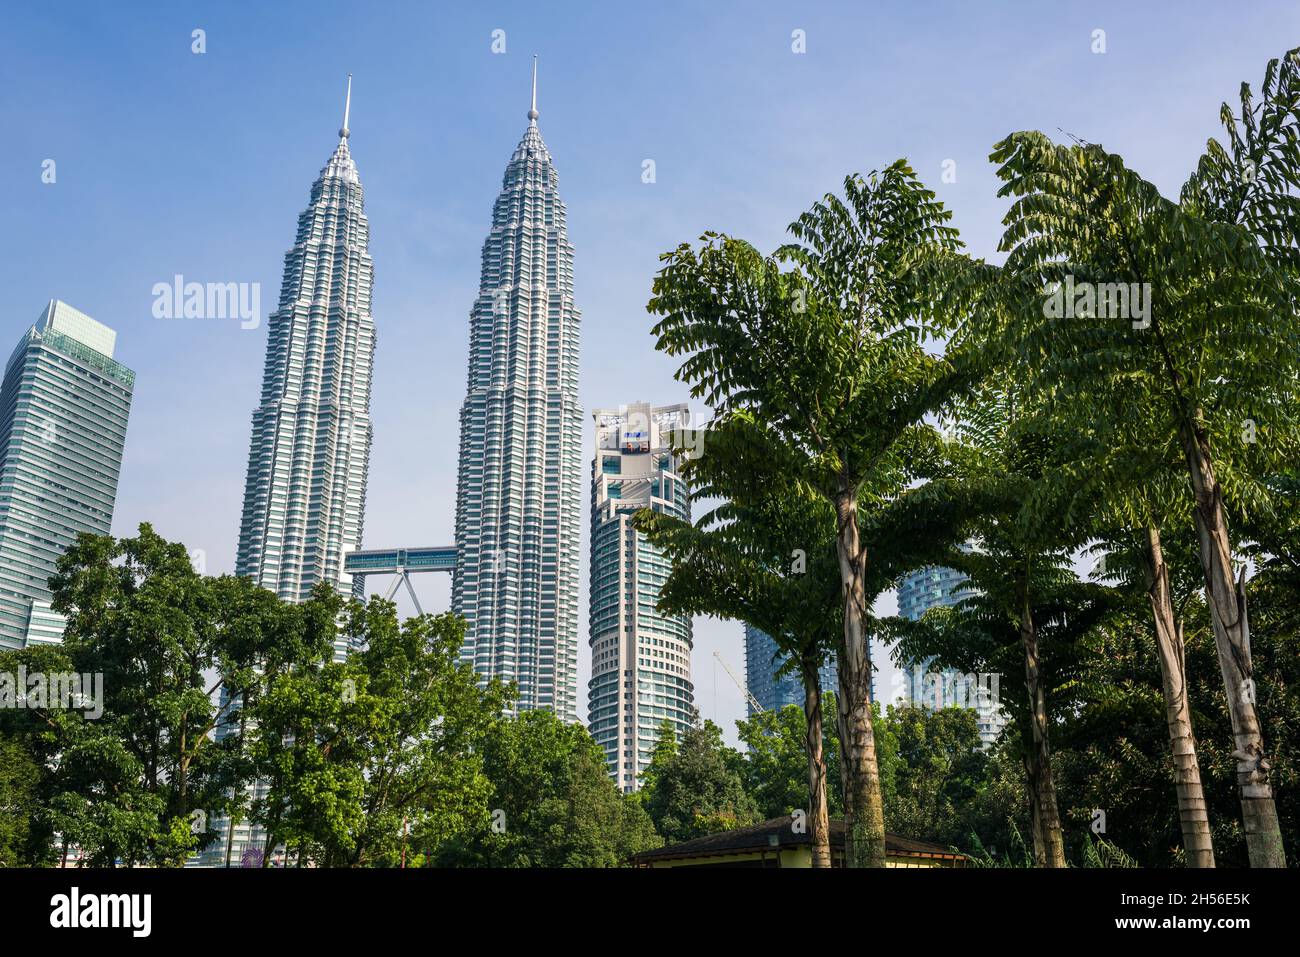 Kuala Lumpur, Malaysia, 10 Aug 2015: Popular tourist destination Petronas Twin Towers. Stock Photo